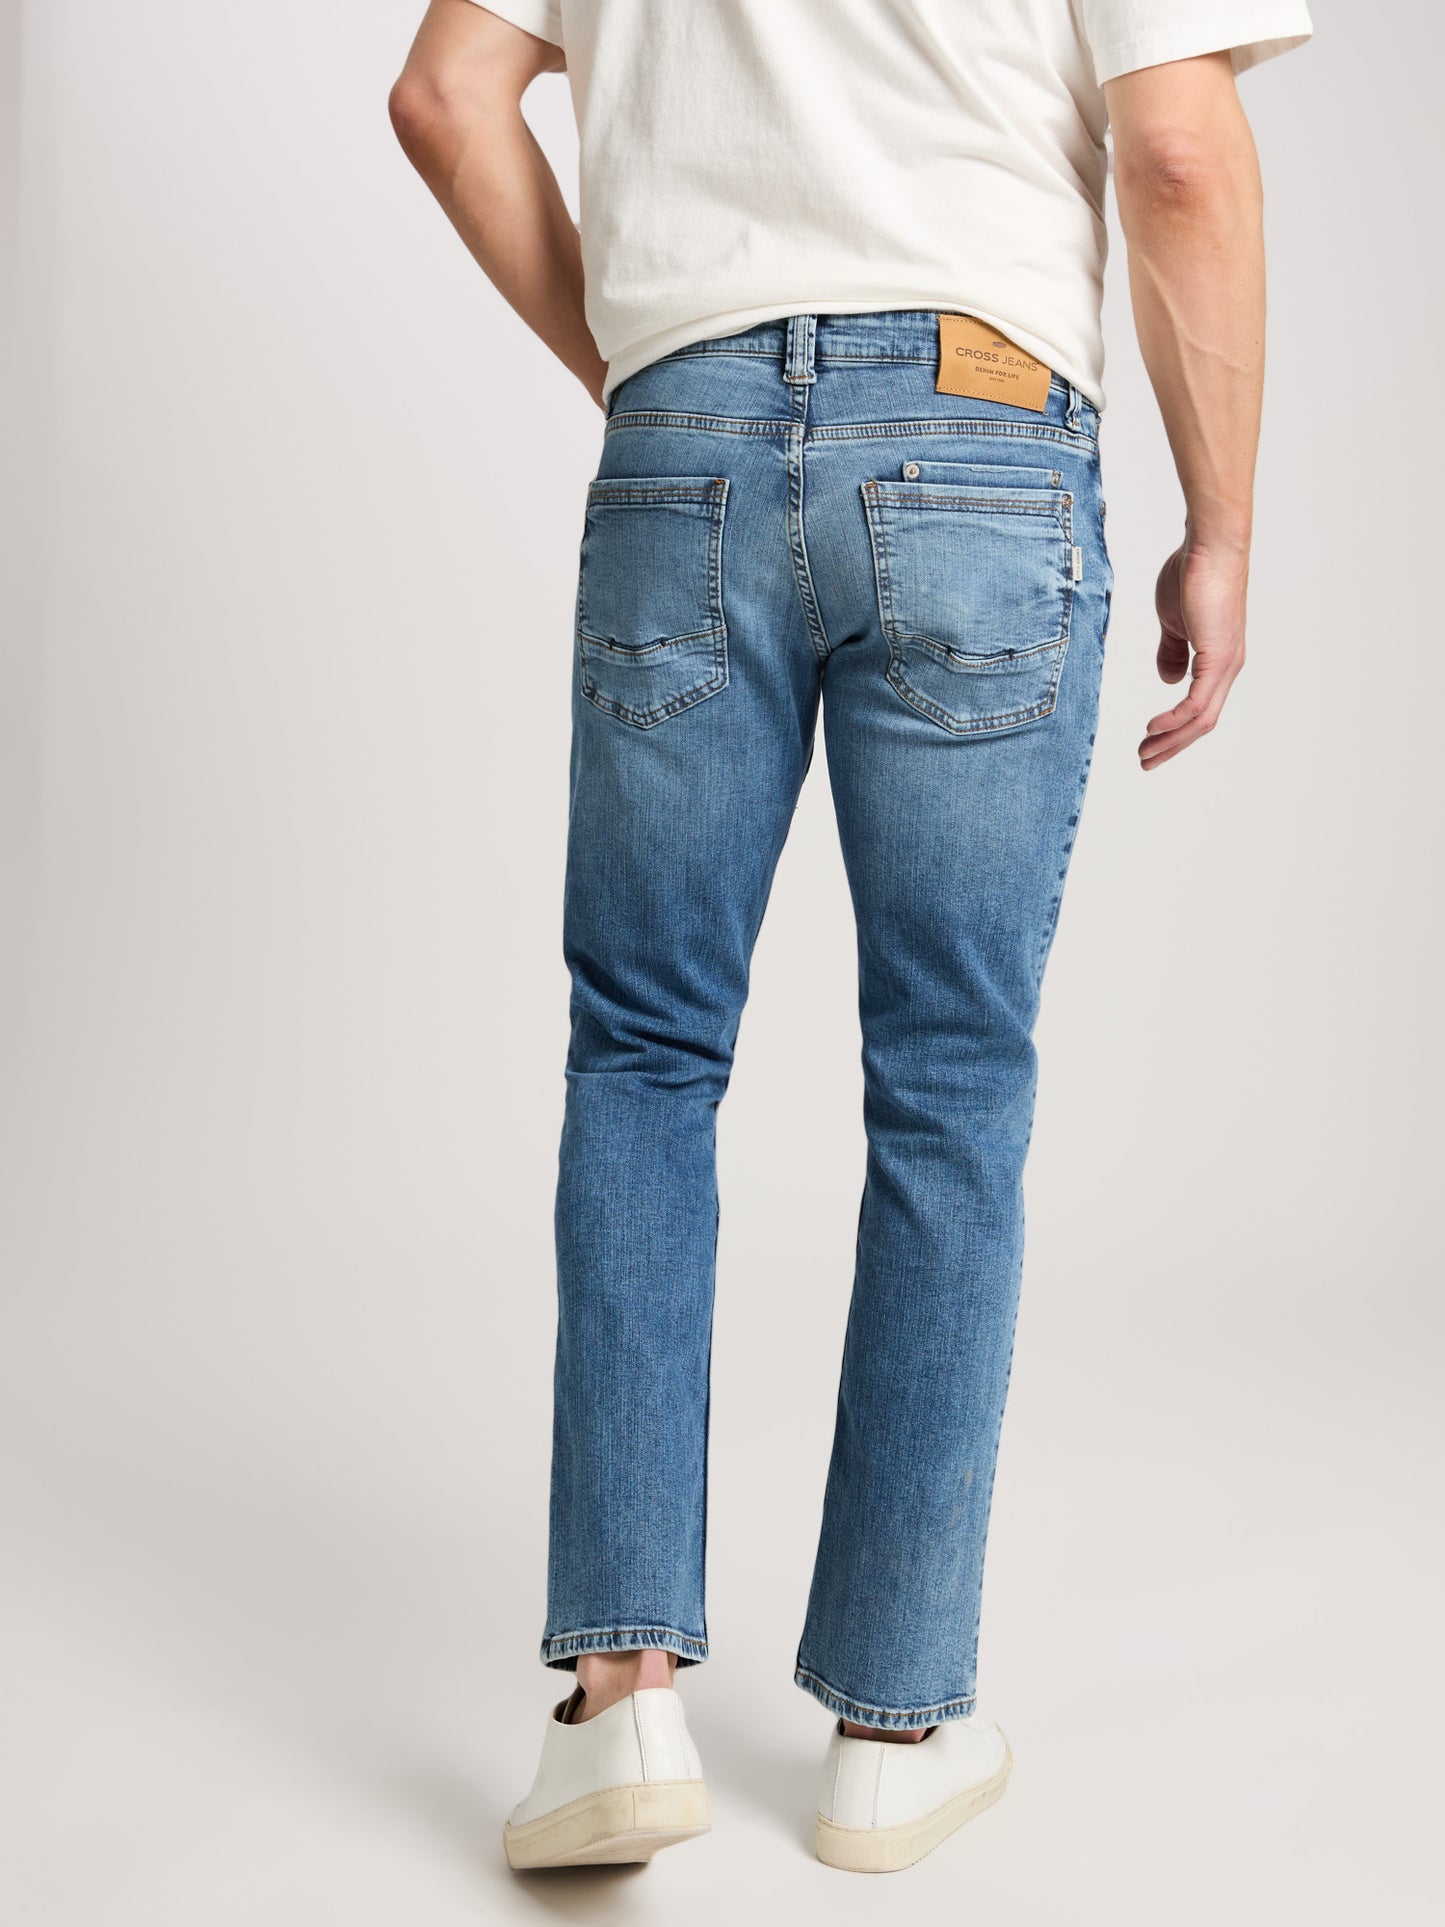 Dylan Herren Jeans Regular Fit Regular Waist Straight Leg mittelblau